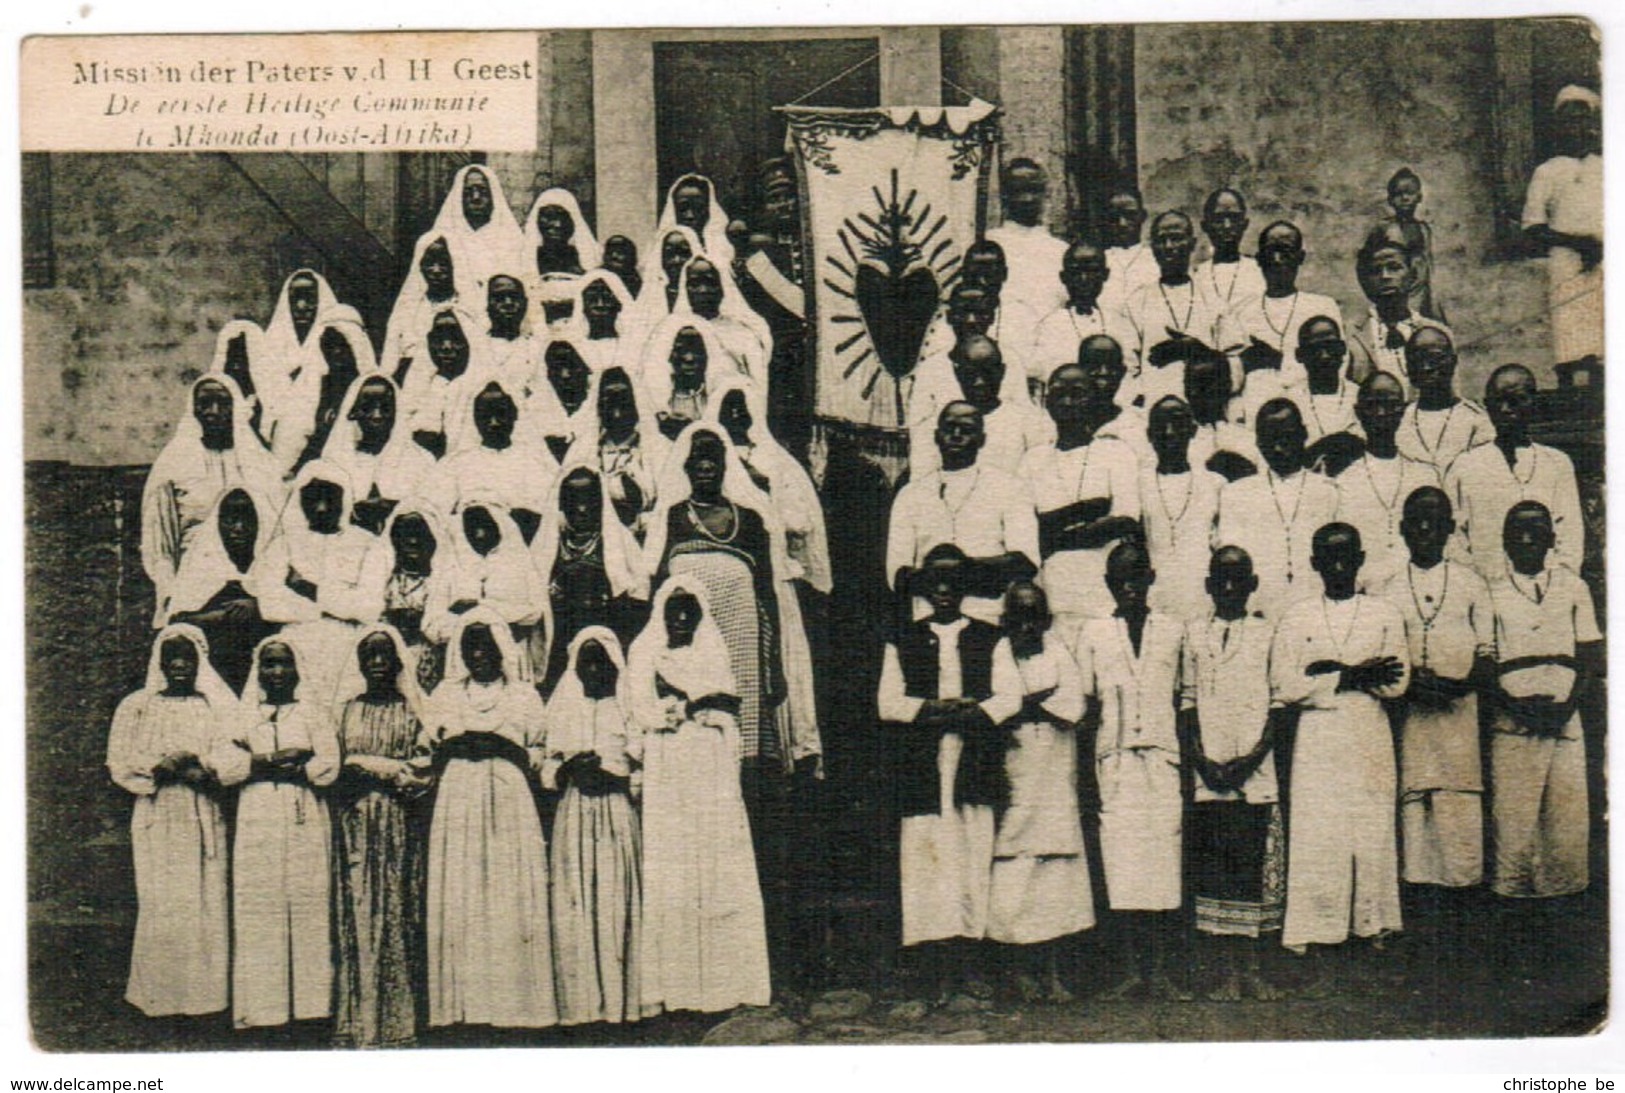 Missiën Der Paters Van Den H Geest, Eerste Heilige Communie In Mhonda, Oost Afrika (pk44300) - Non Classés